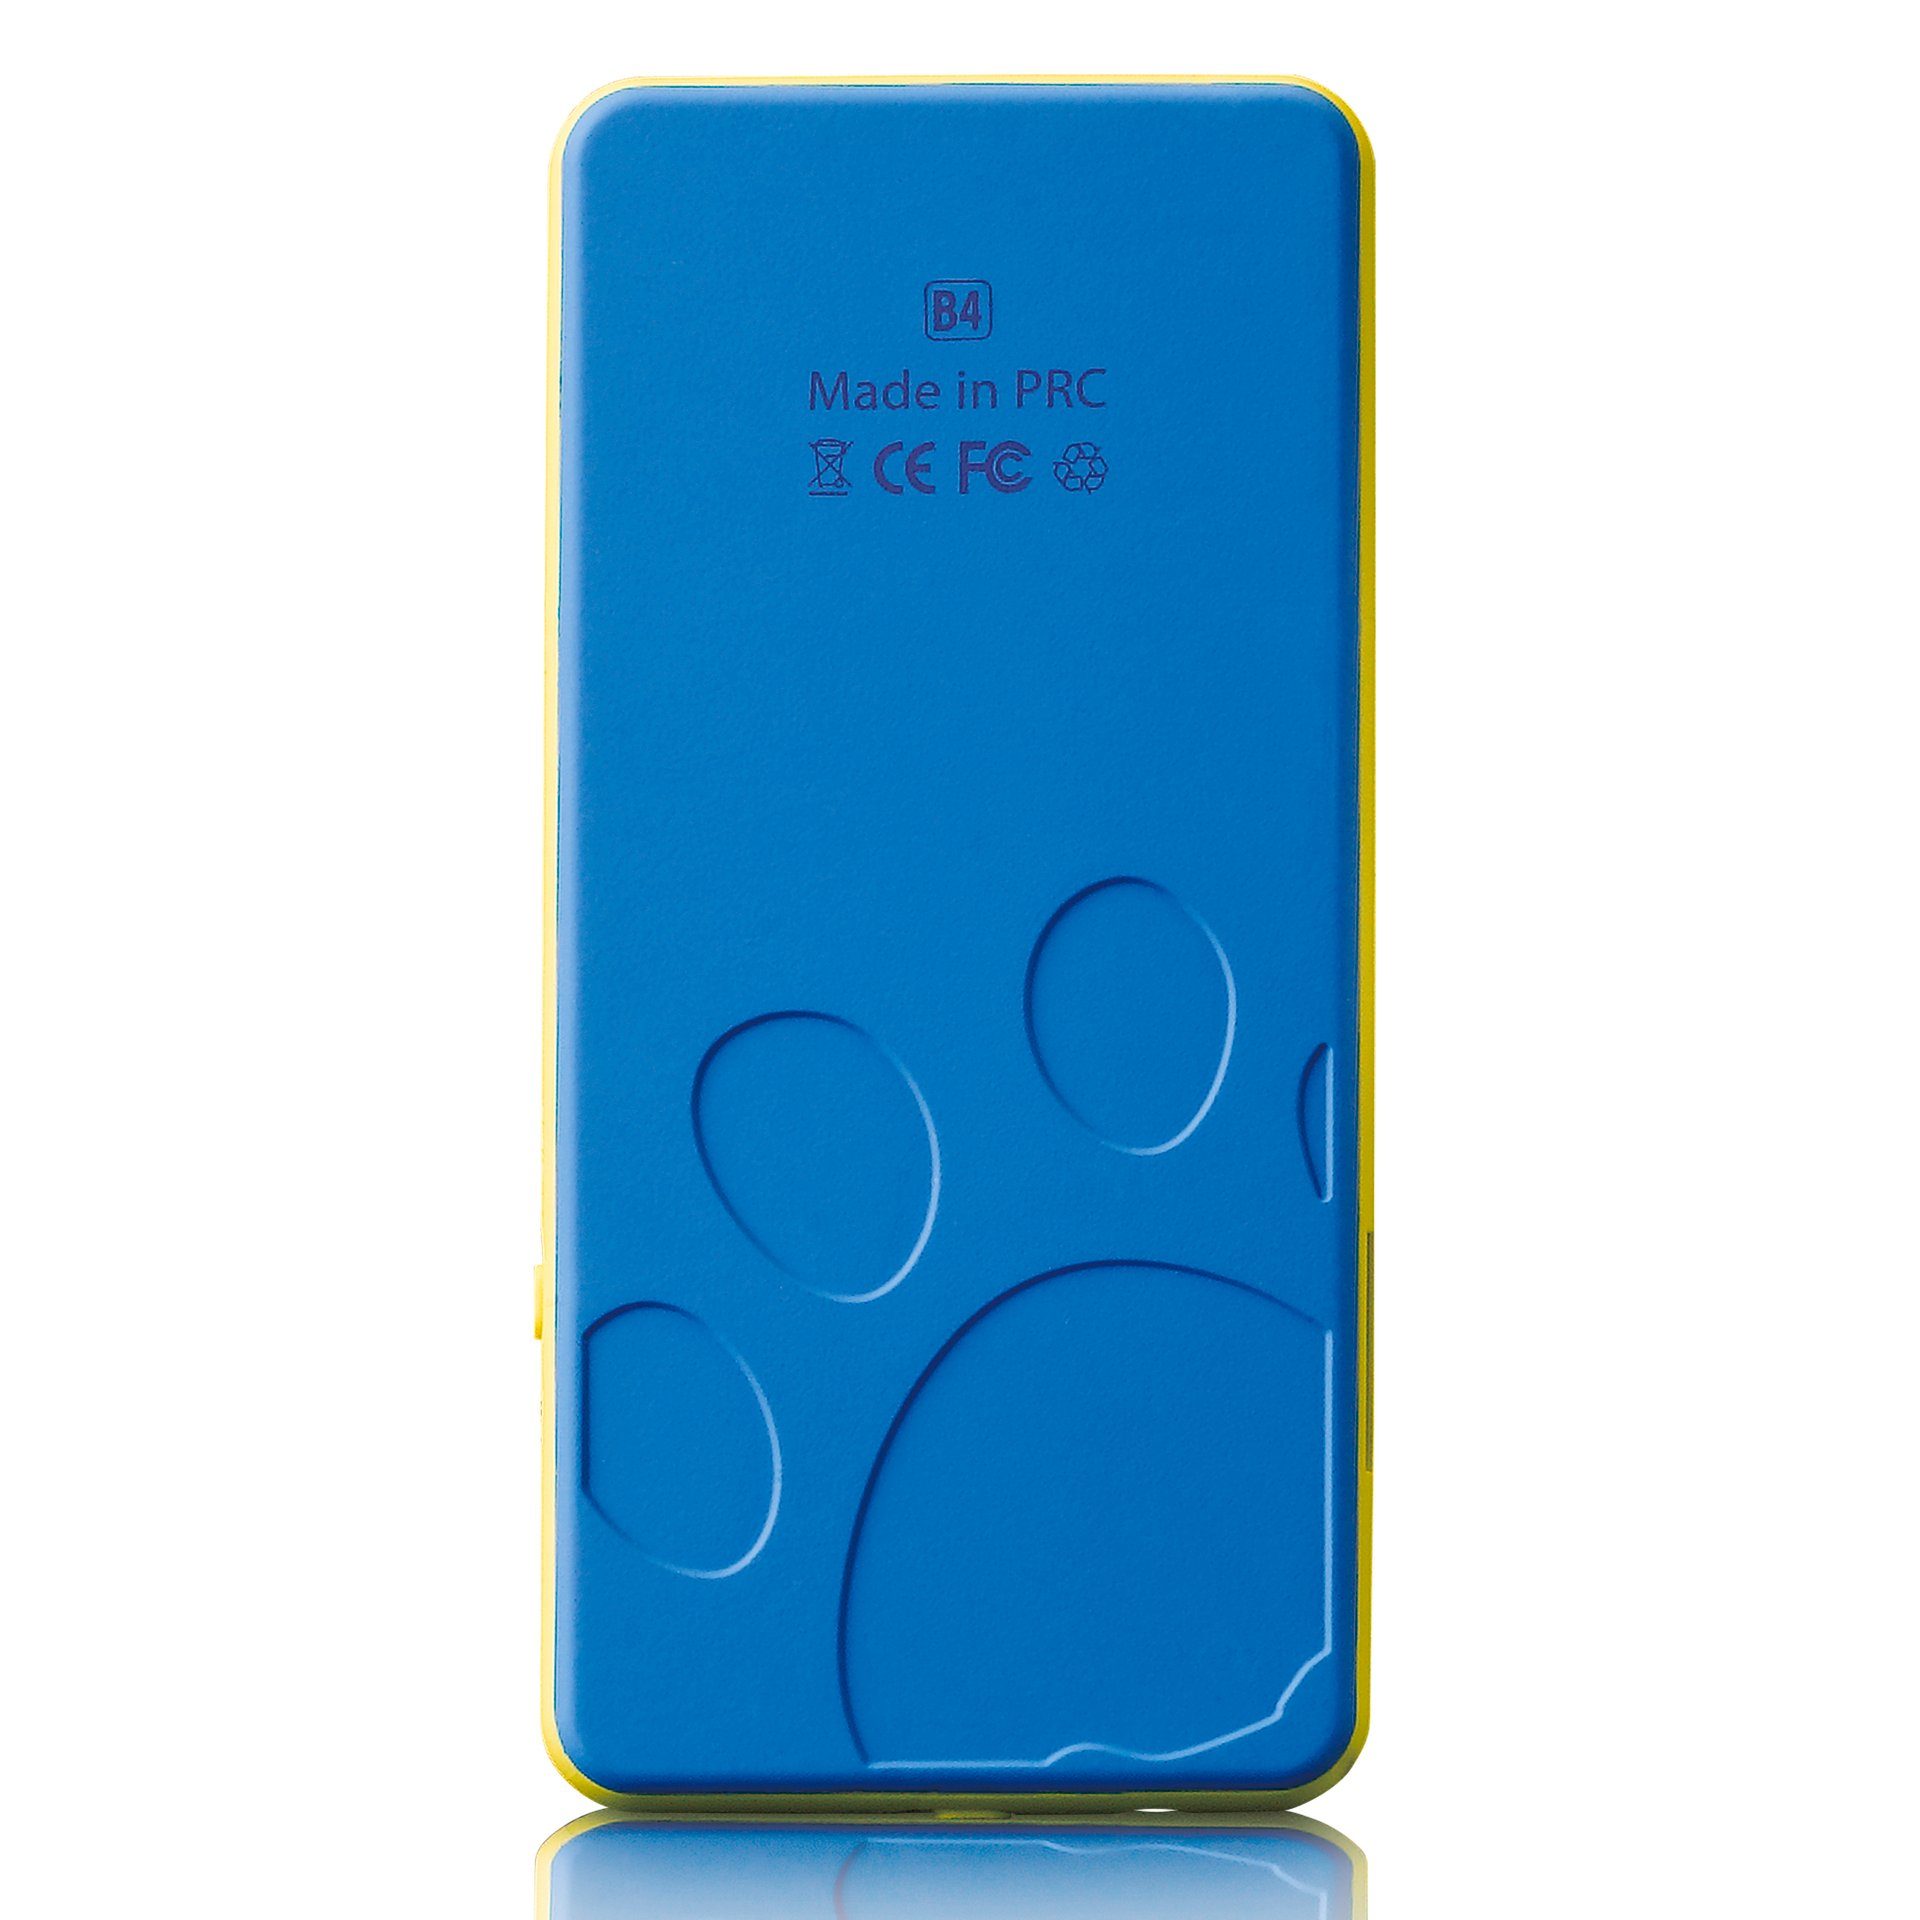 Lenco Xemio-560 MP3-Player Blau (8 GB)